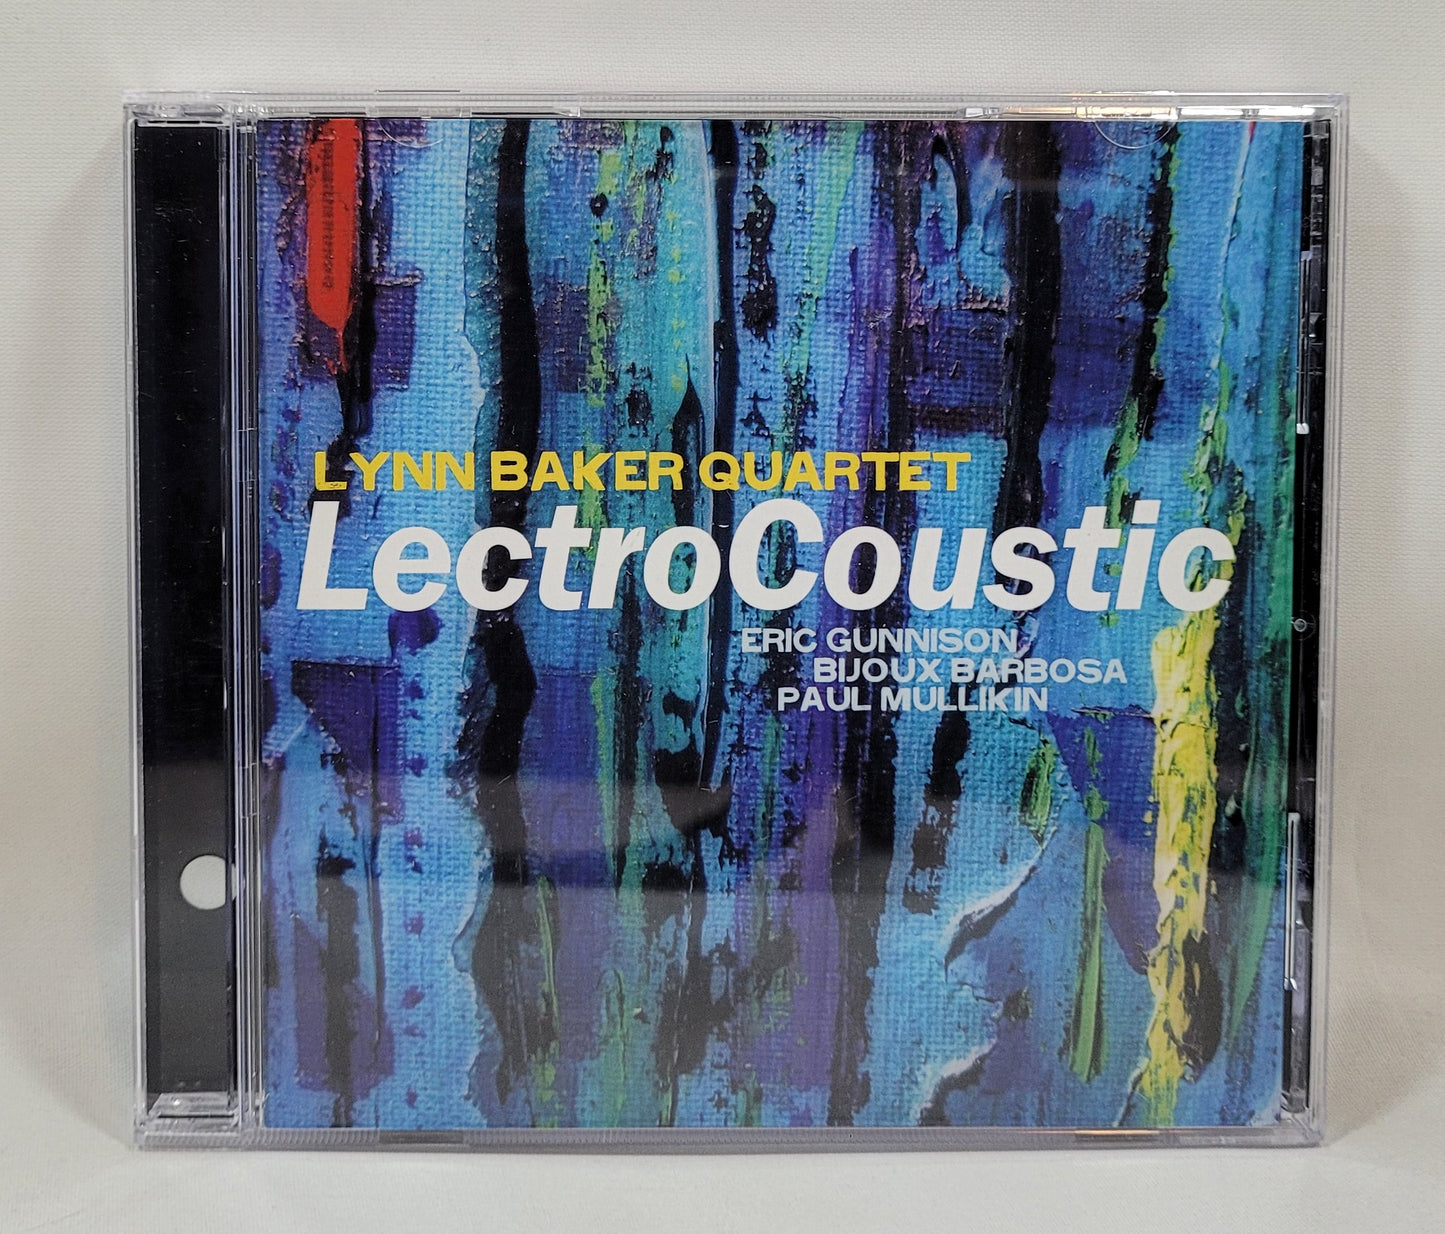 Lynn Baker Quartet - LectroCoustic [CD]